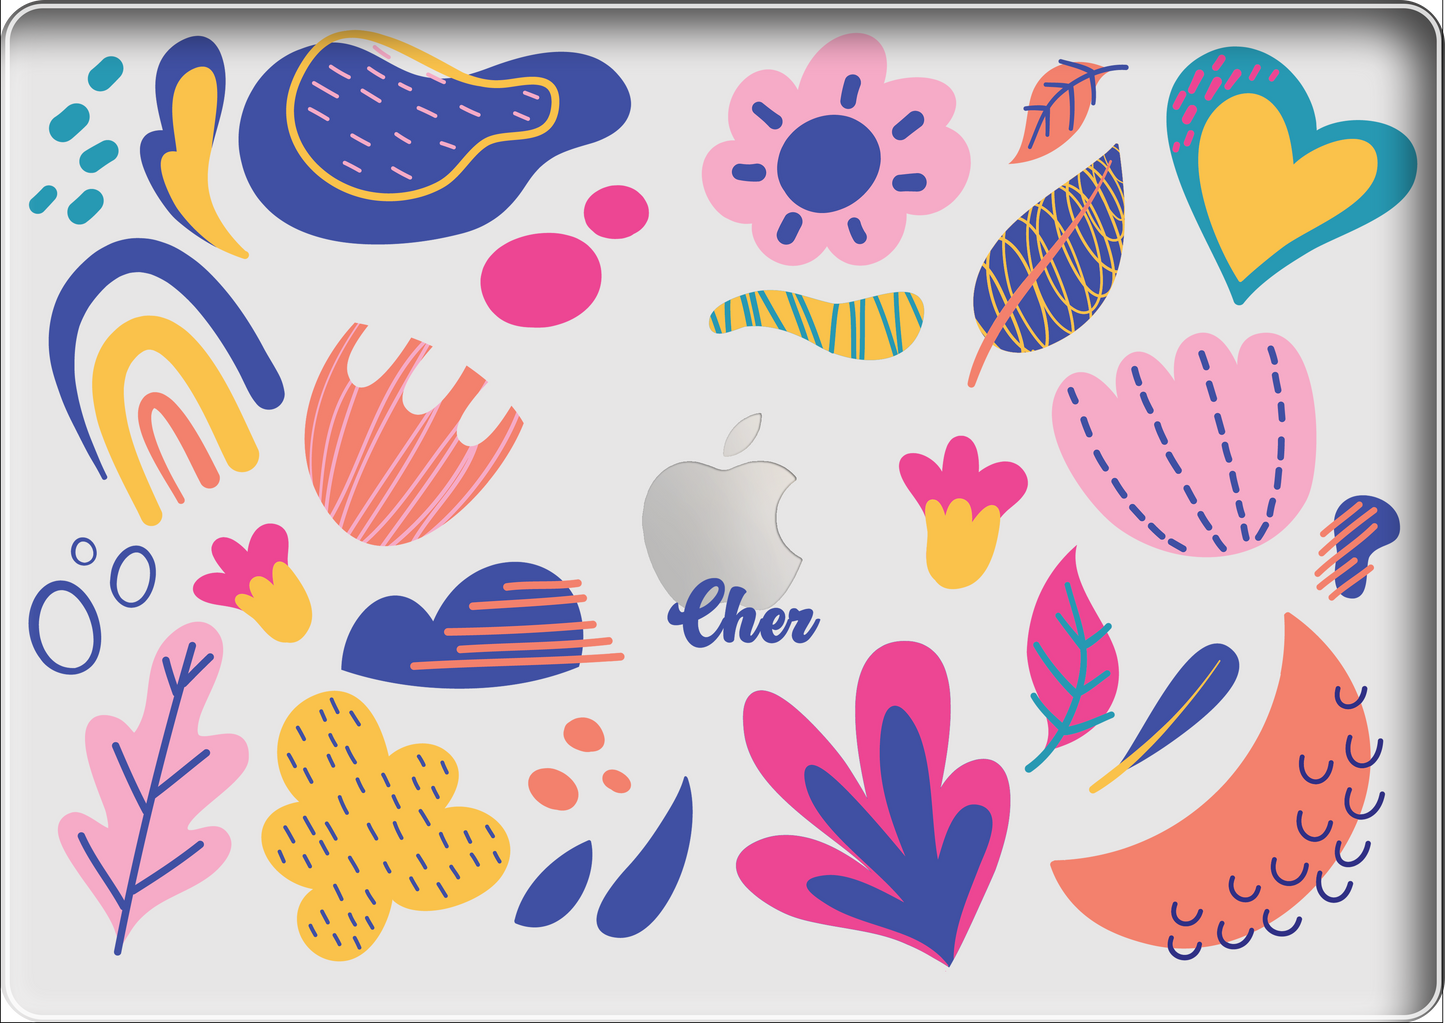 MacBook Snap Case - Florals